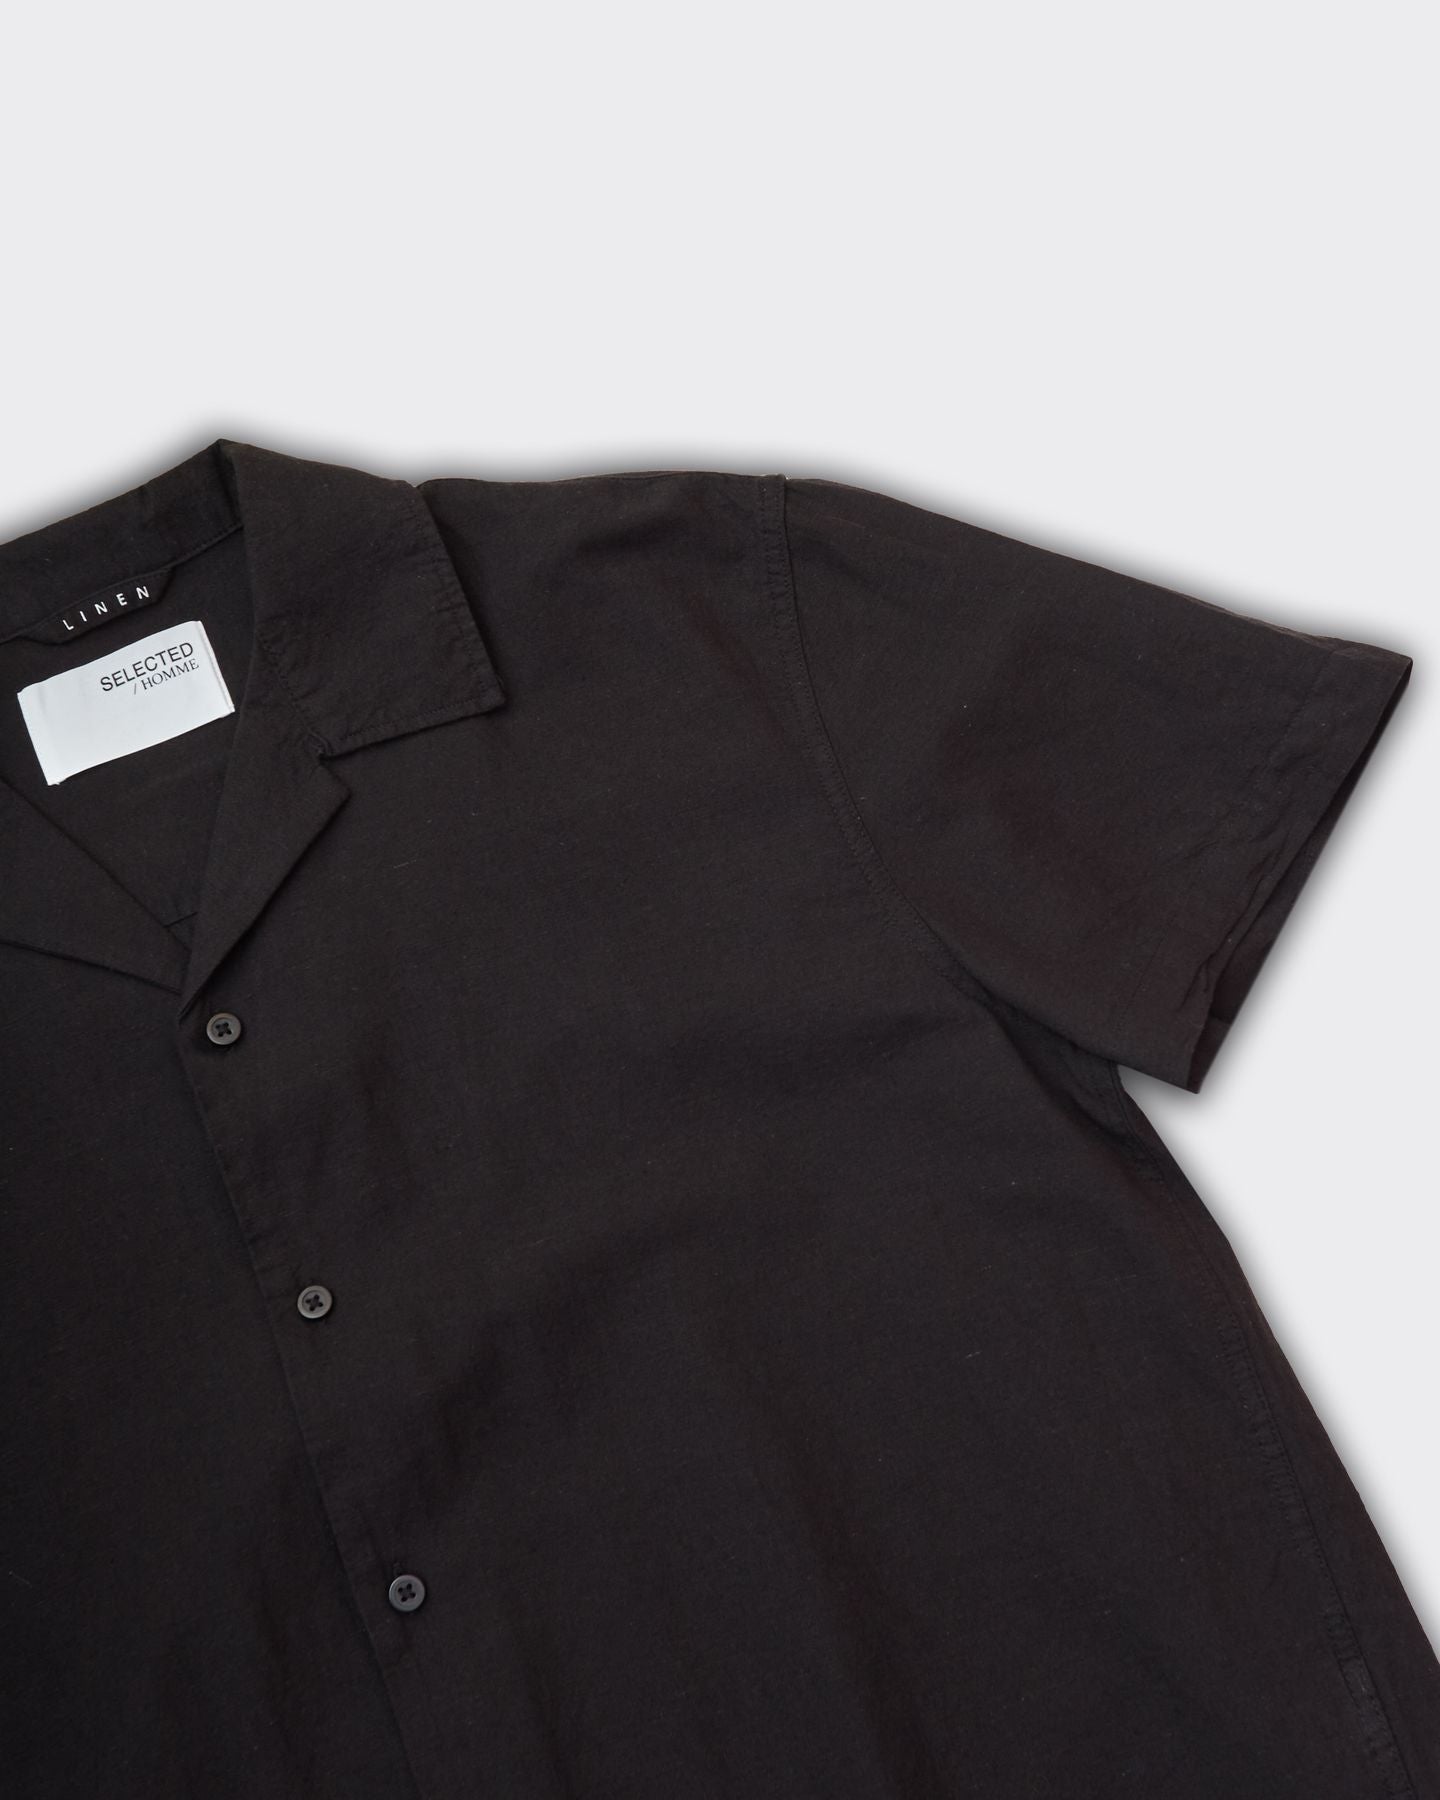 Linen Resort Shirt Black